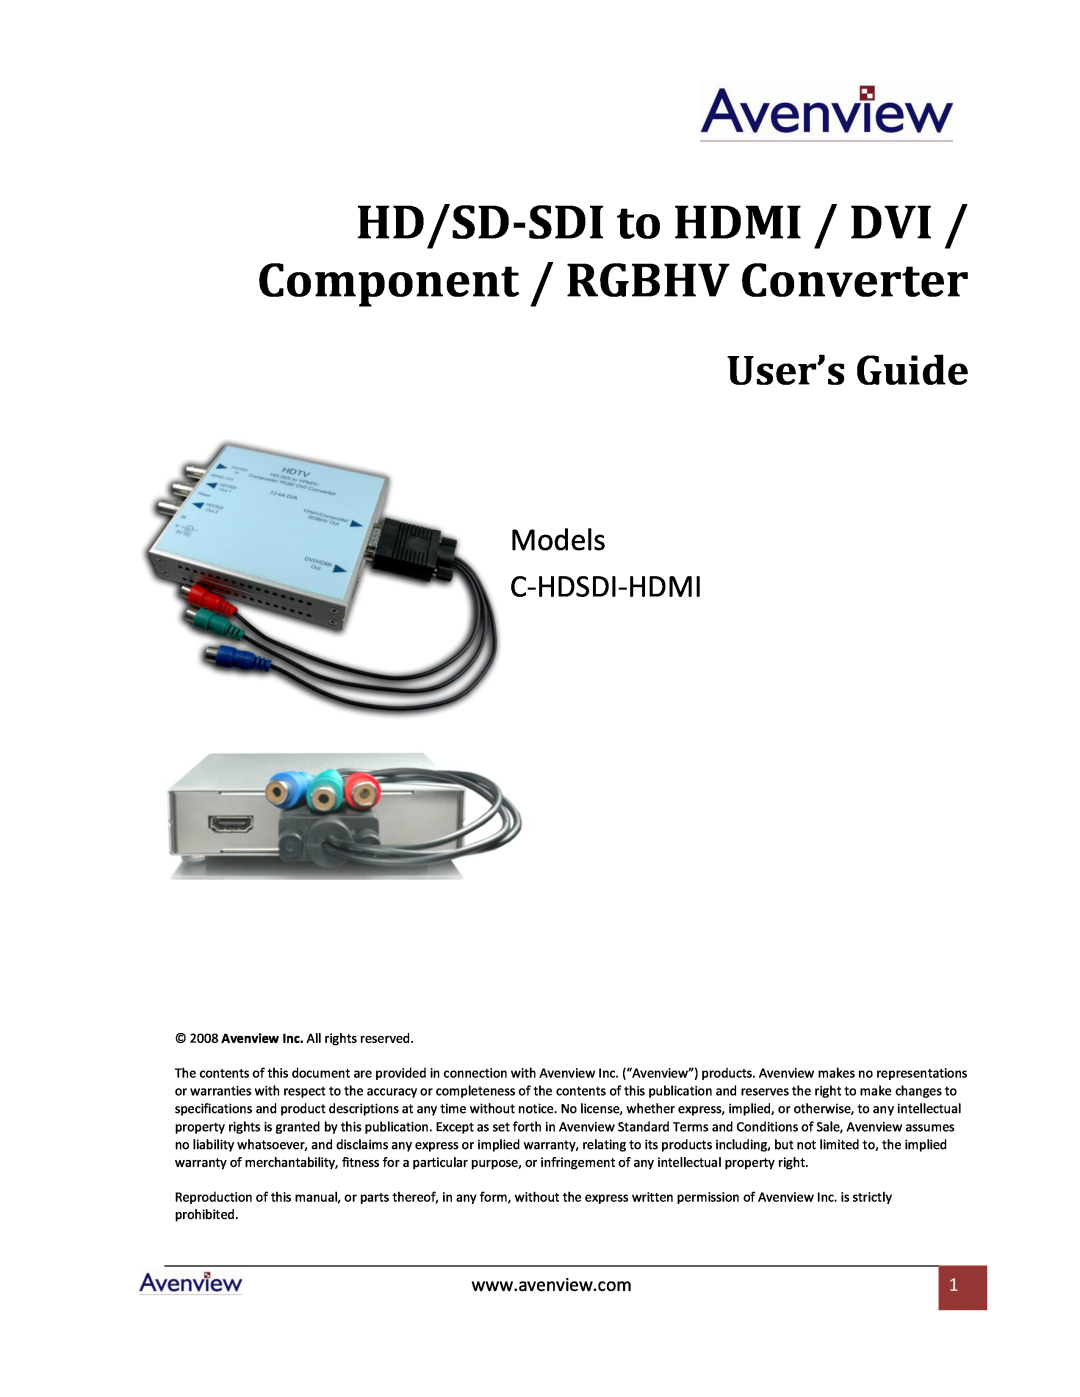 Avenview C-HDSDI-HDMI specifications HD/SD-SDI to HDMI / DVI / Component / RGBHV Converter, User’s Guide 